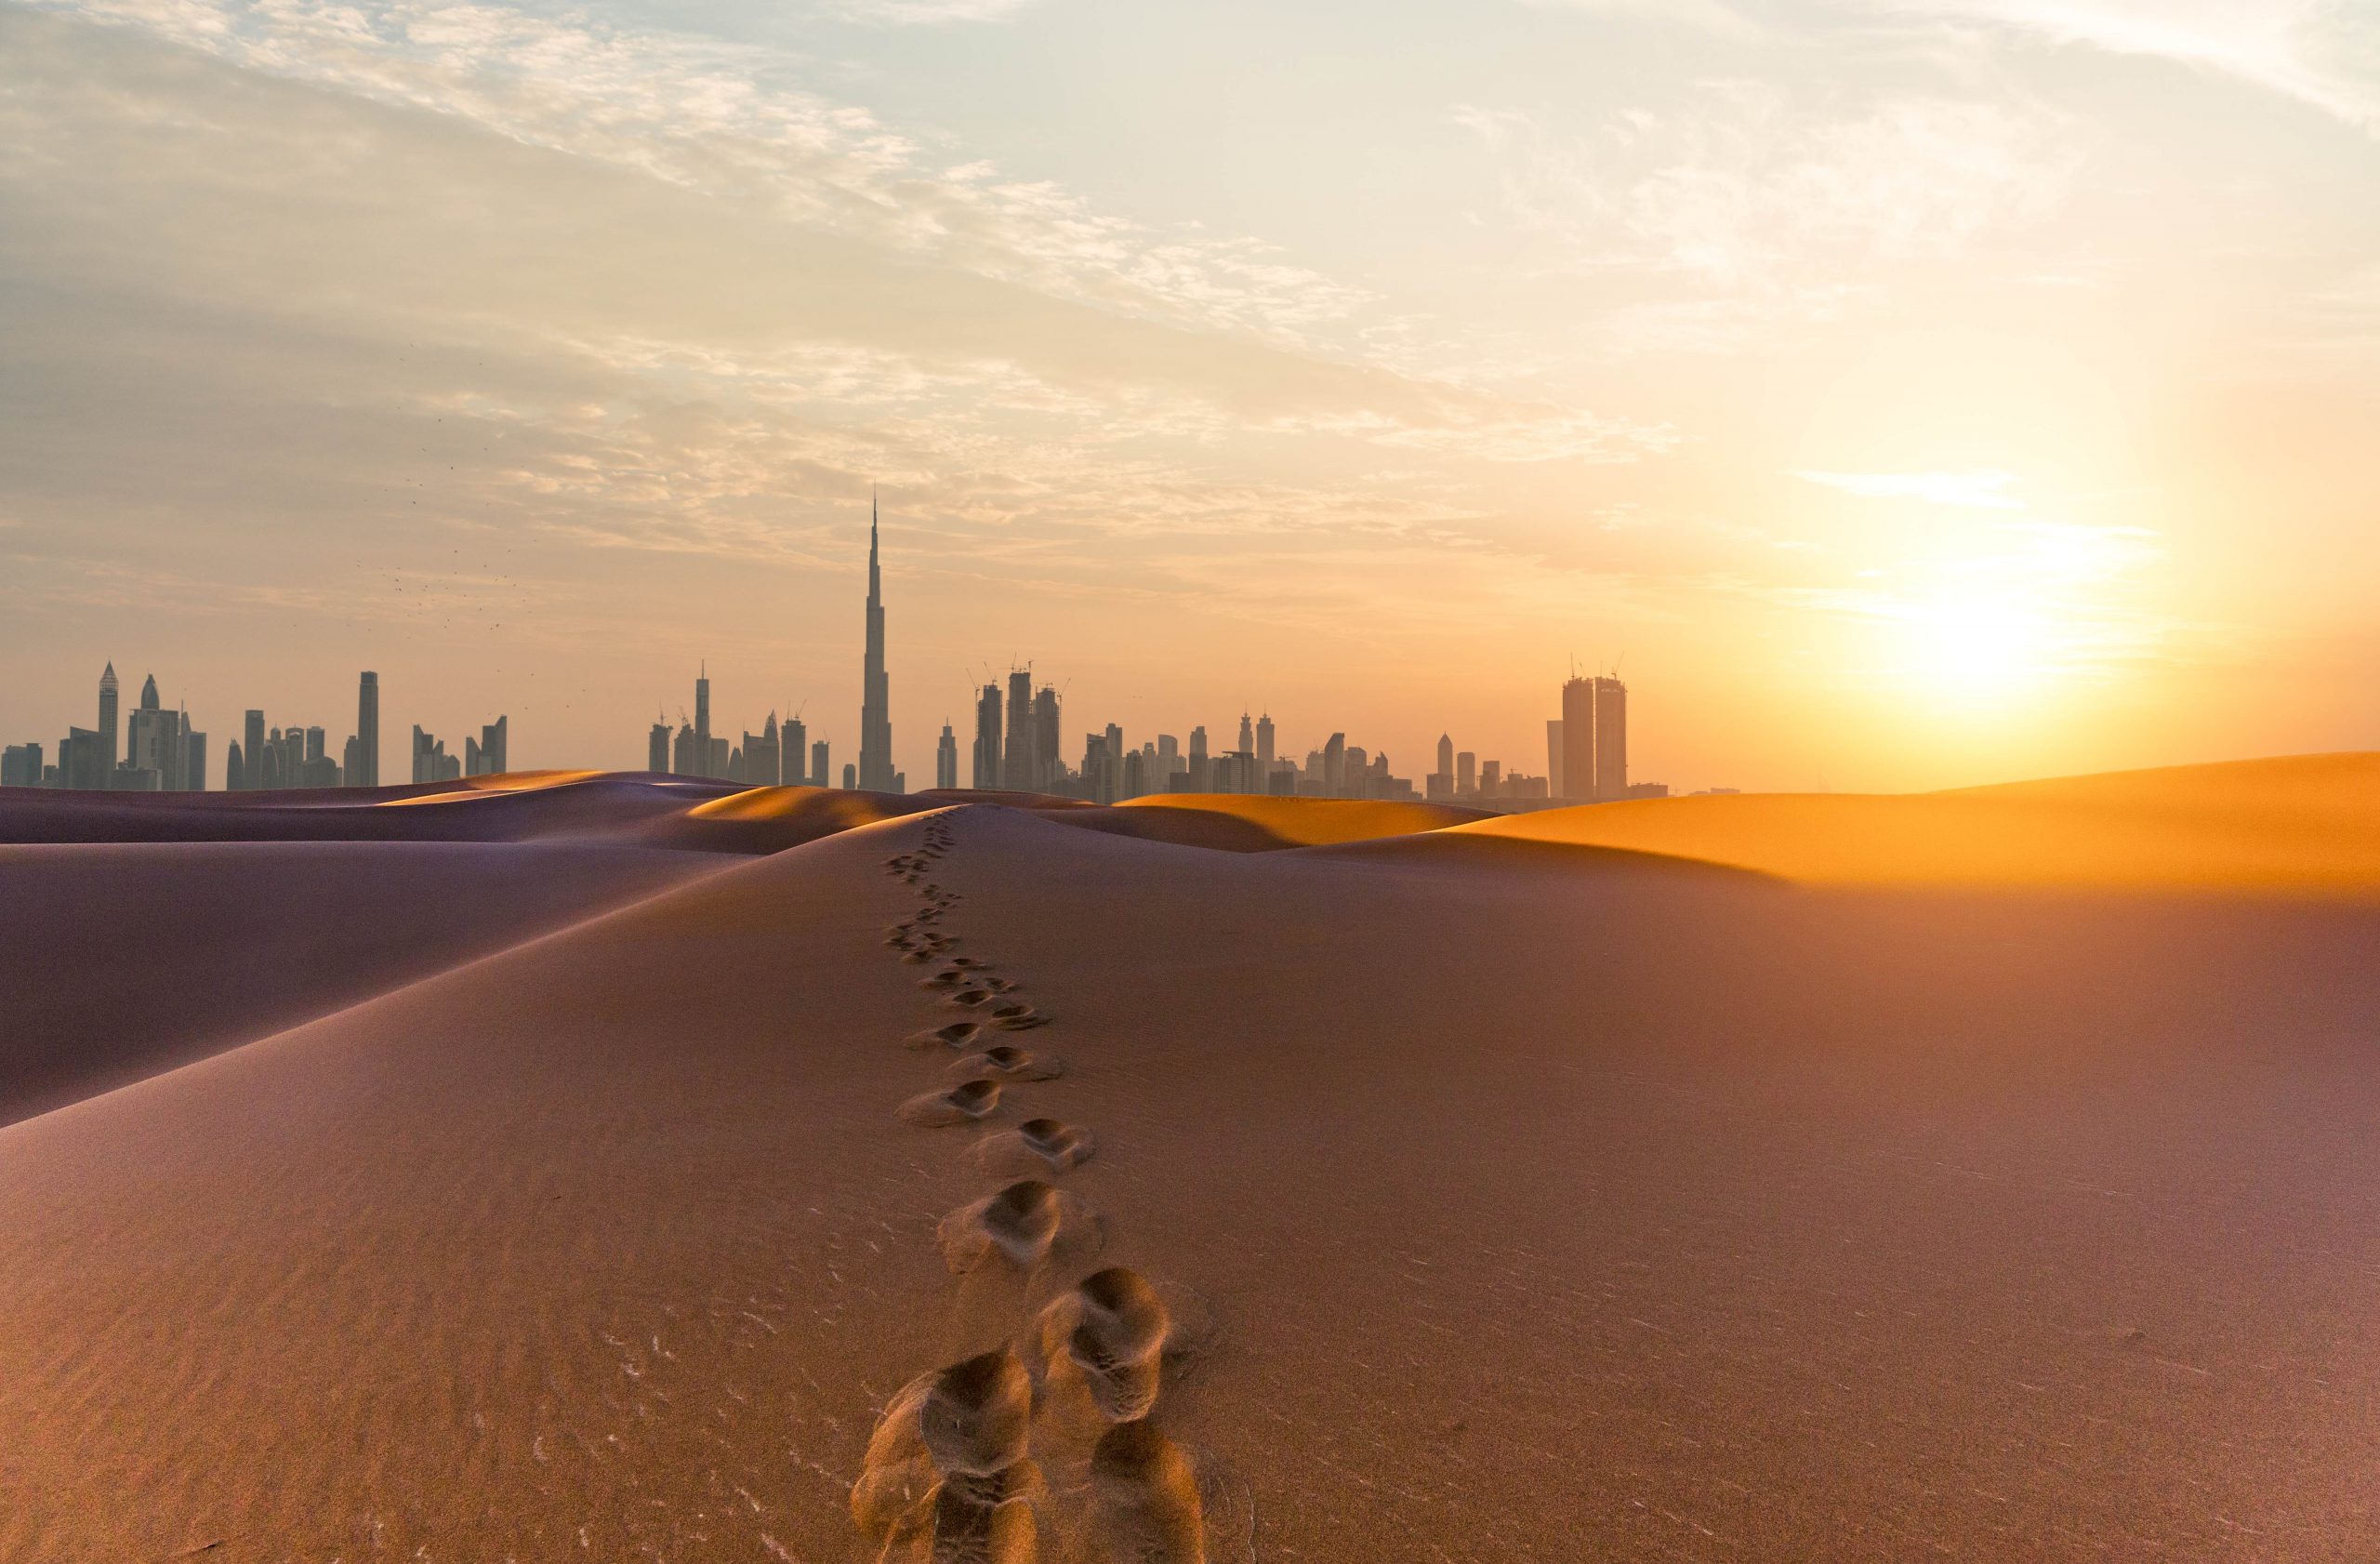 Tracks in the sand lead to Dubai's Burj Khalifa